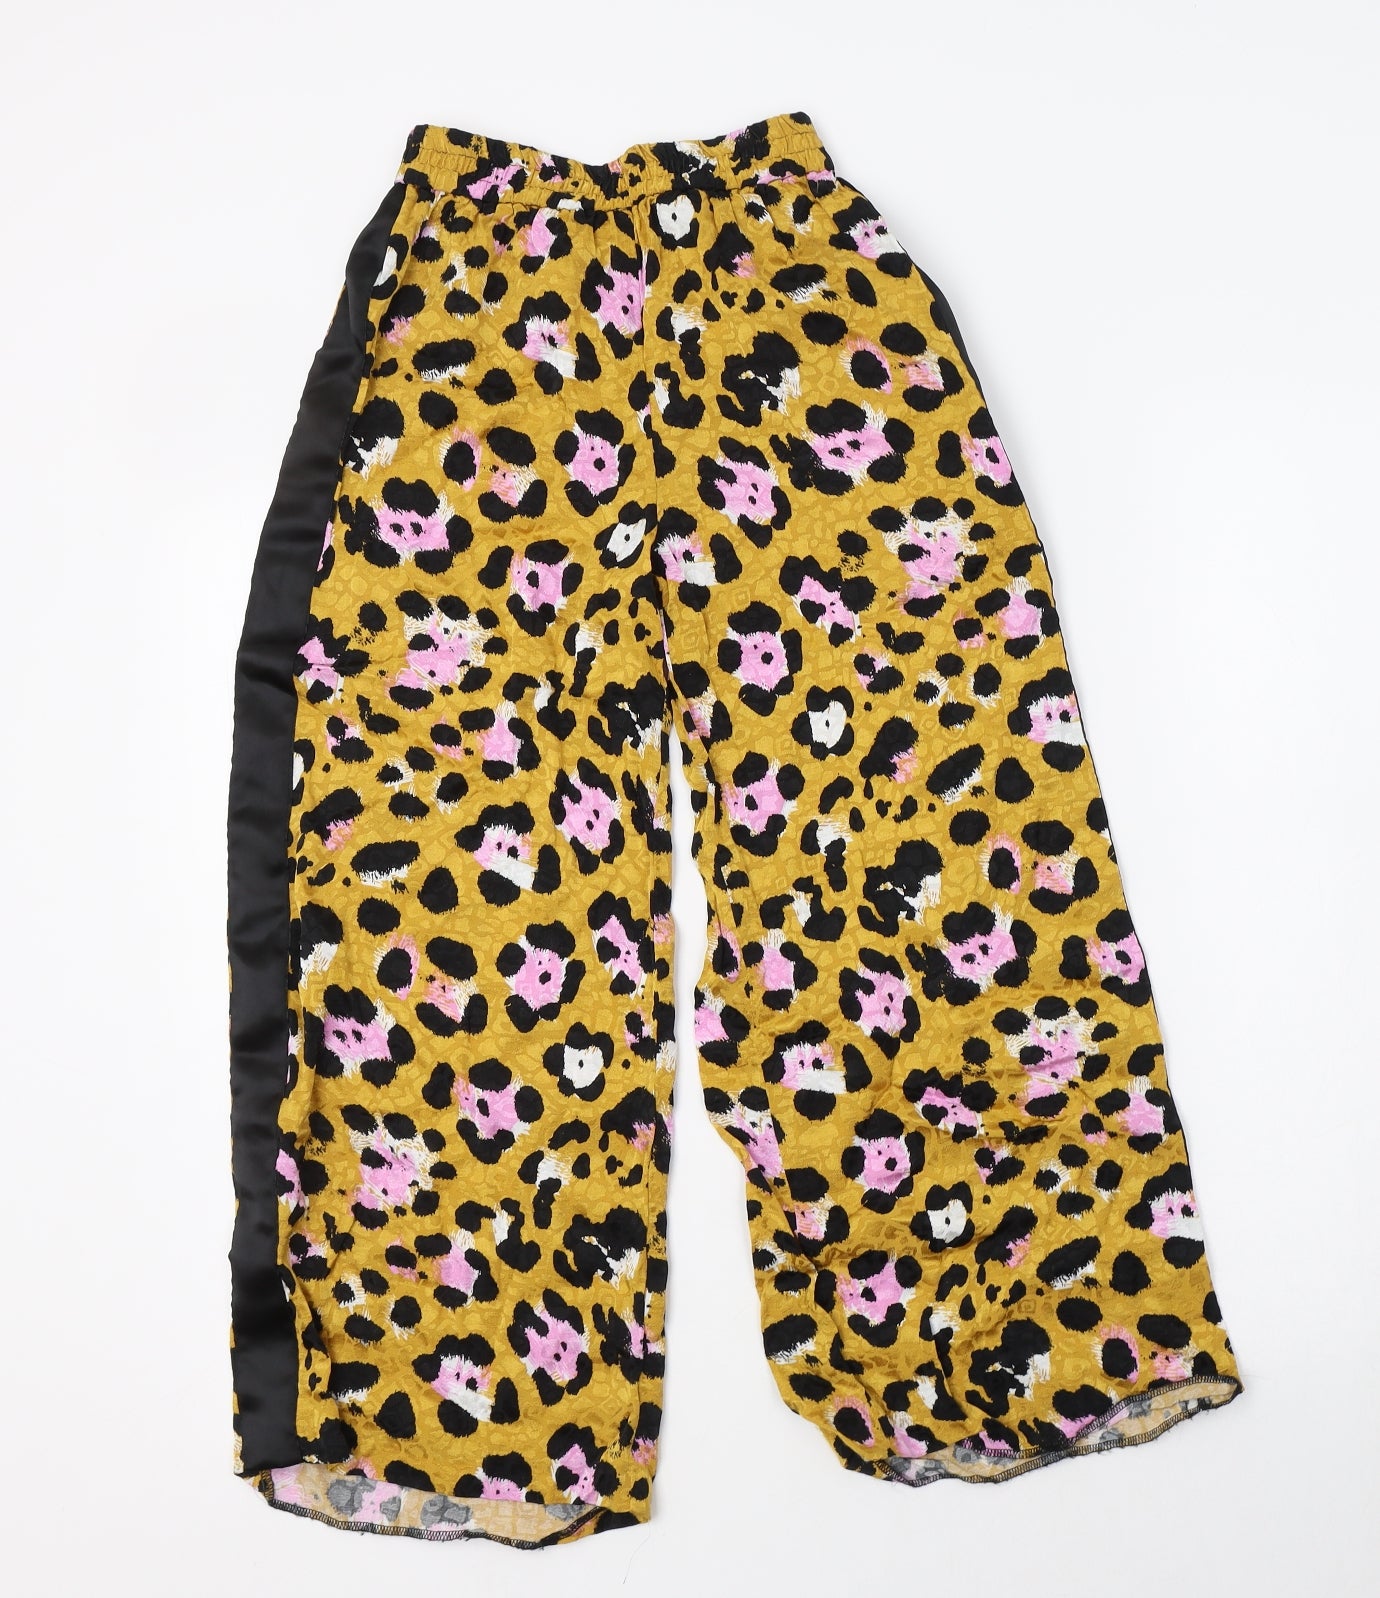 River Island Girls Yellow Animal Print Viscose Harem Trousers Size 9 Months  Regular